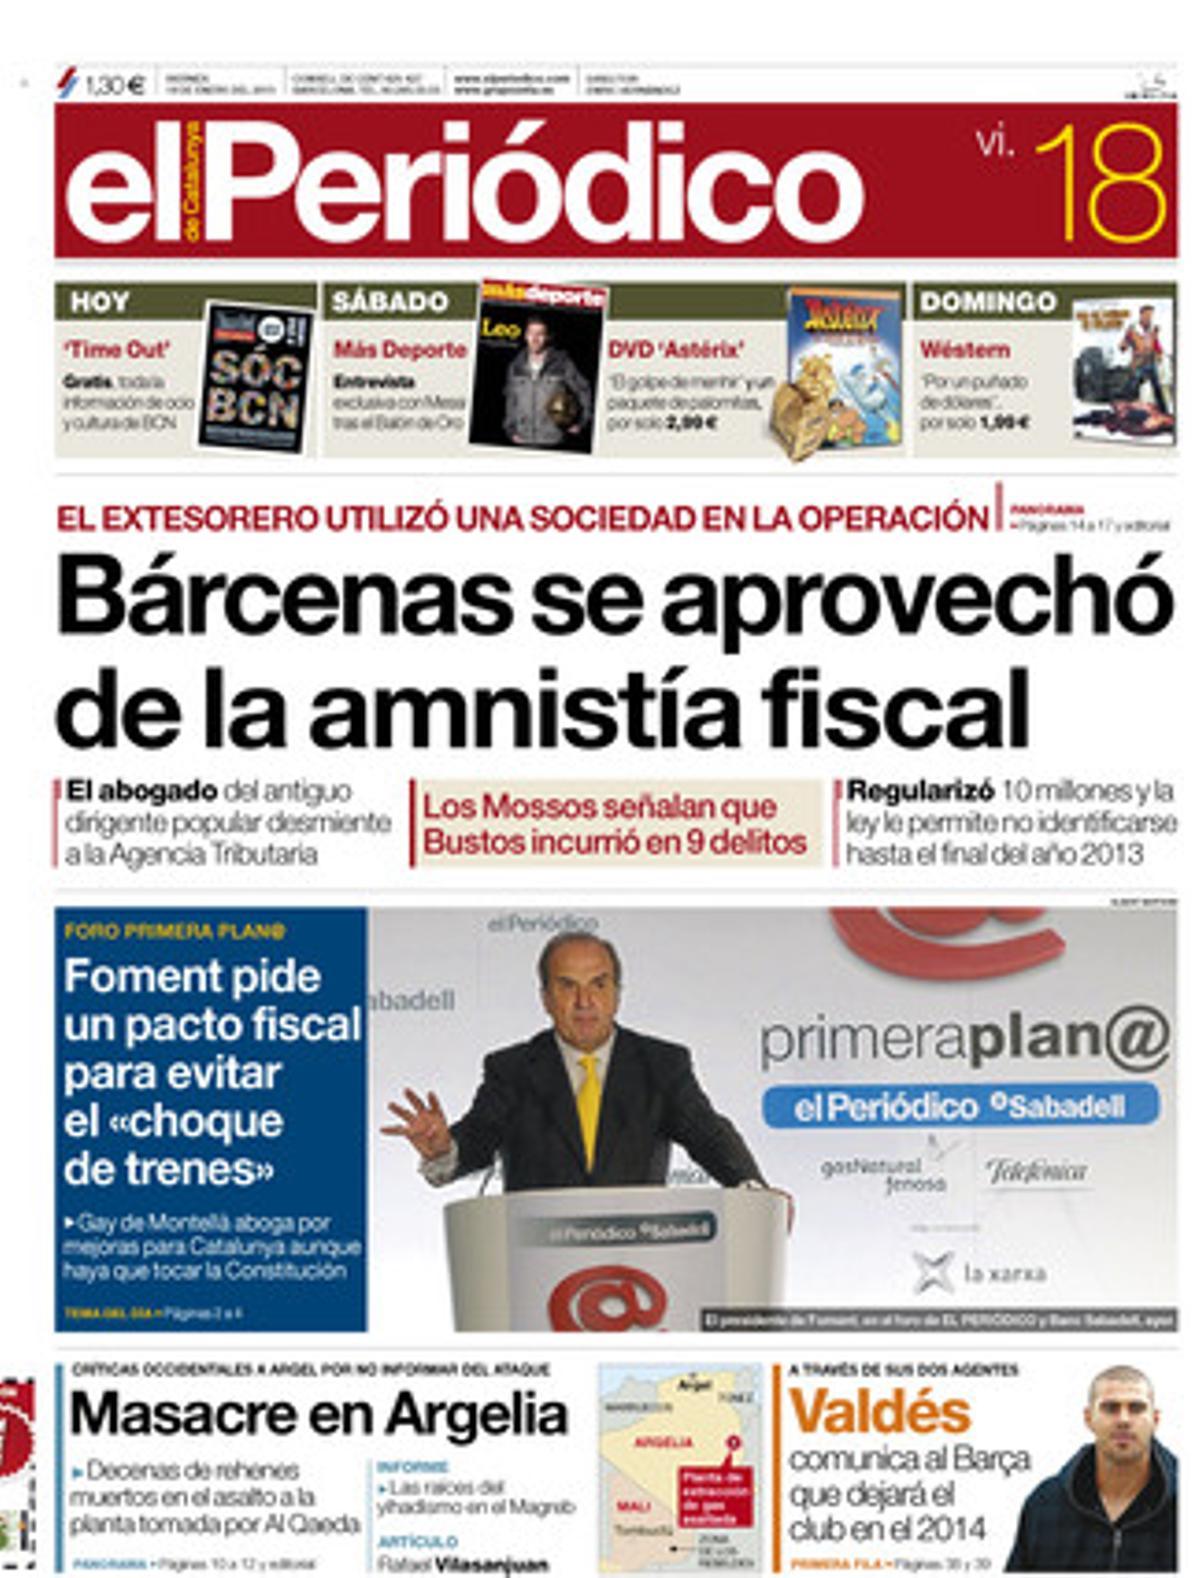 Bárcenas se aprovechó de la amnistía fiscal. Portada publicada el 18 de enero del 2013.